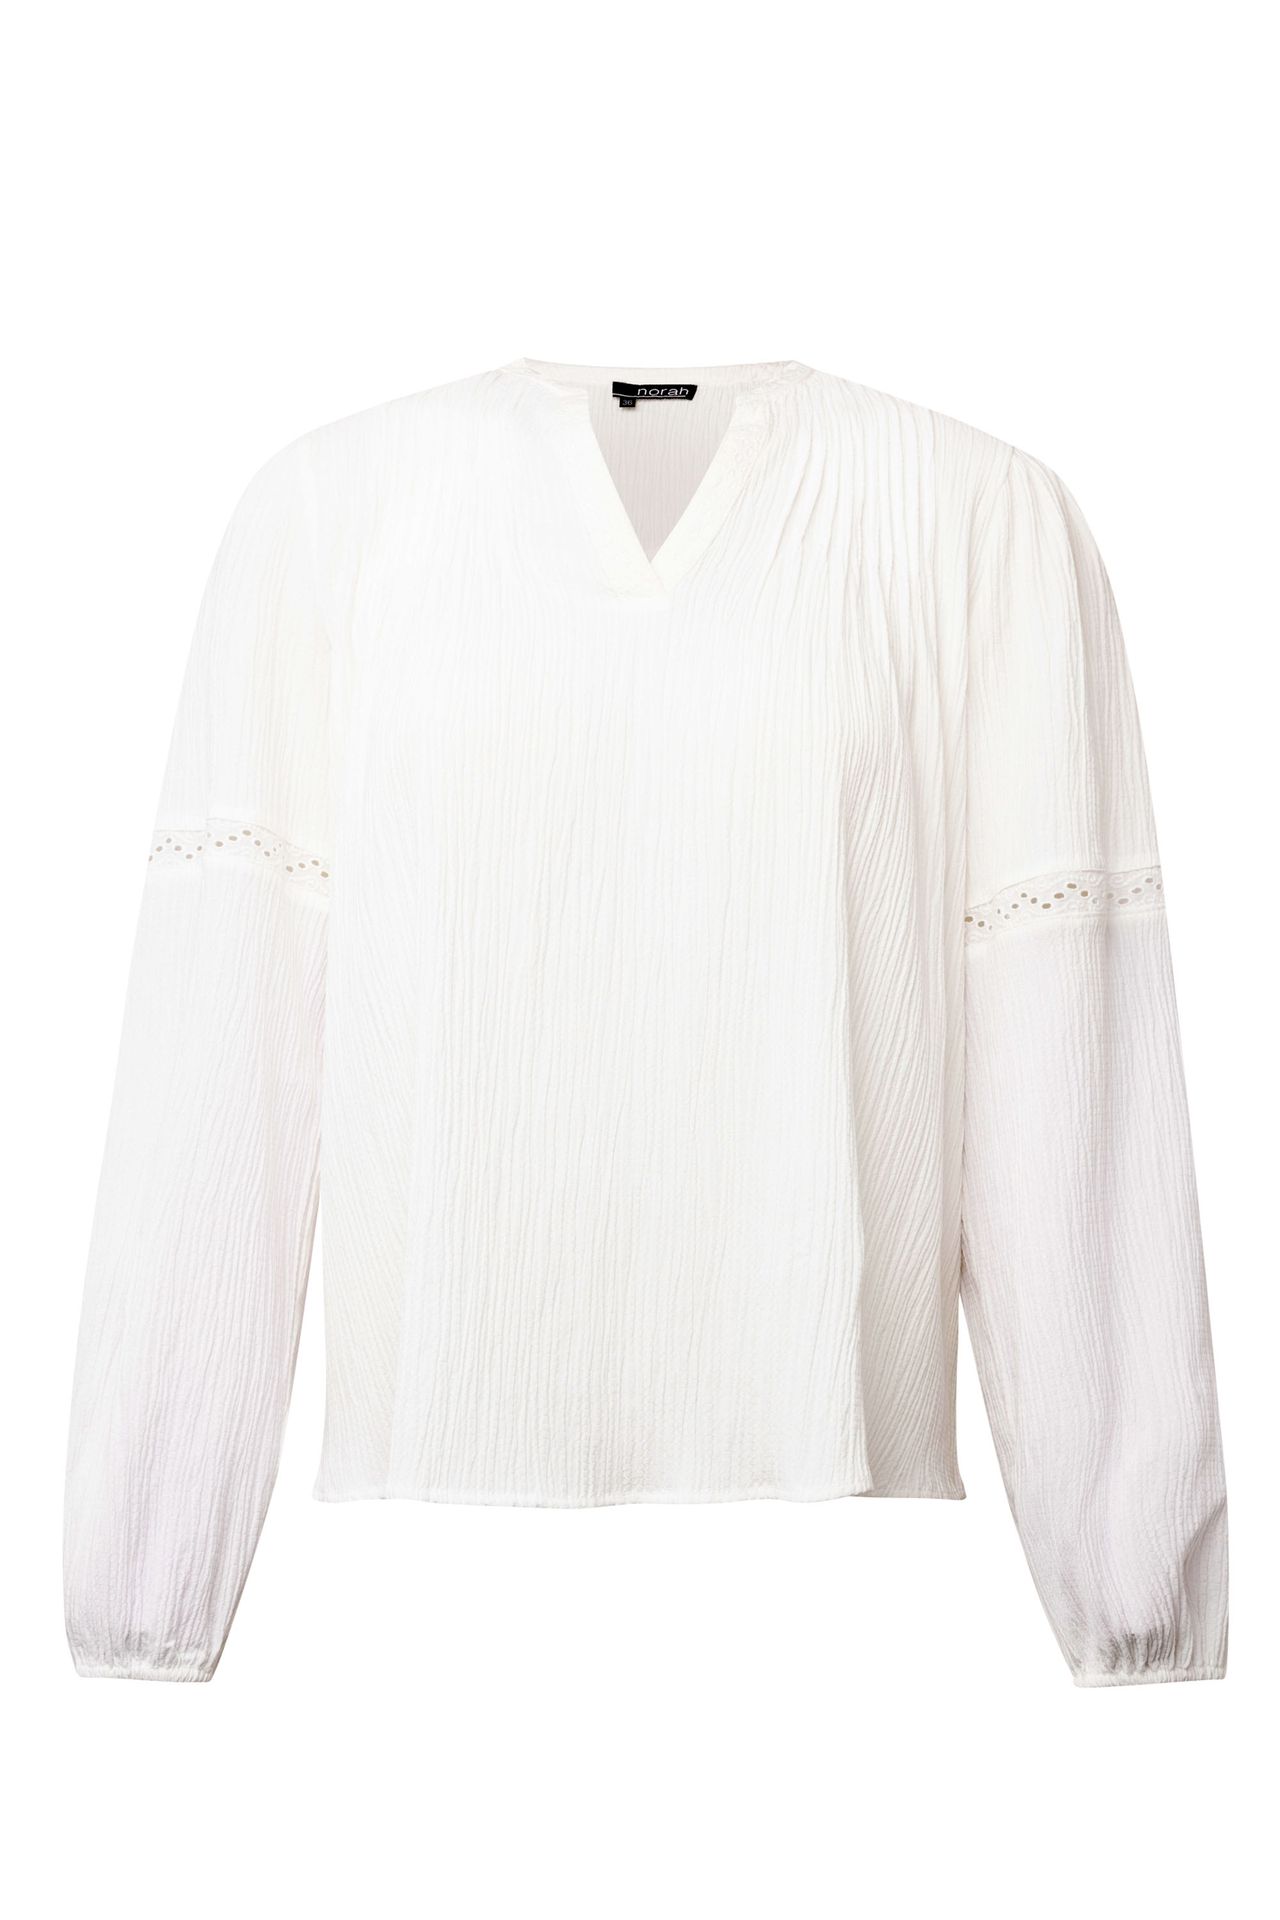 Norah Off-white blouse off-white 214069-101